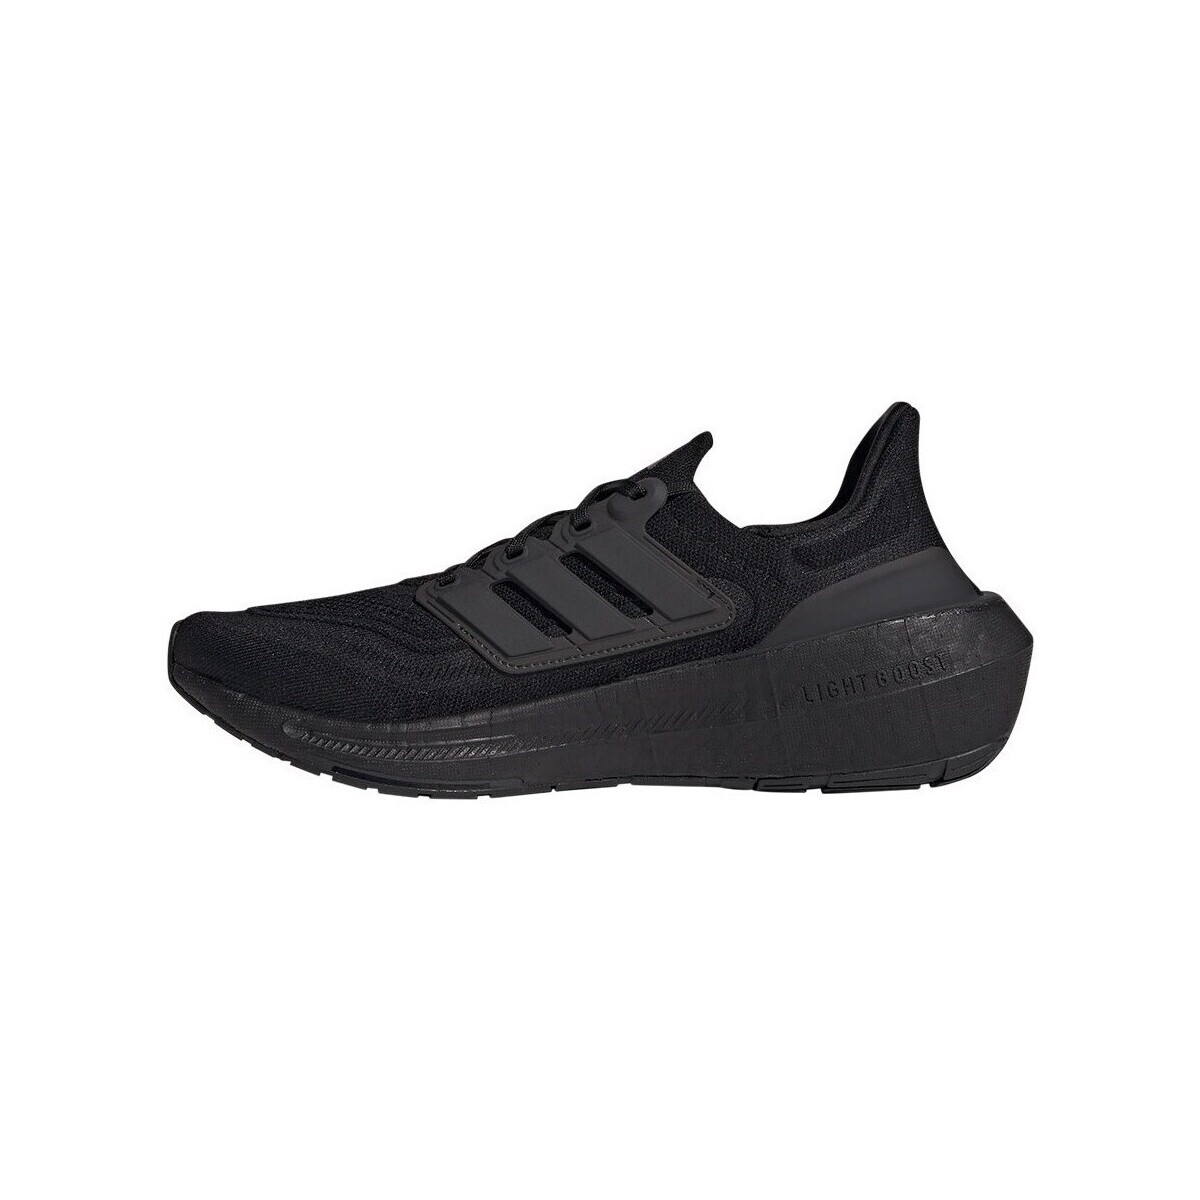 Adidas Ultraboost Light Black